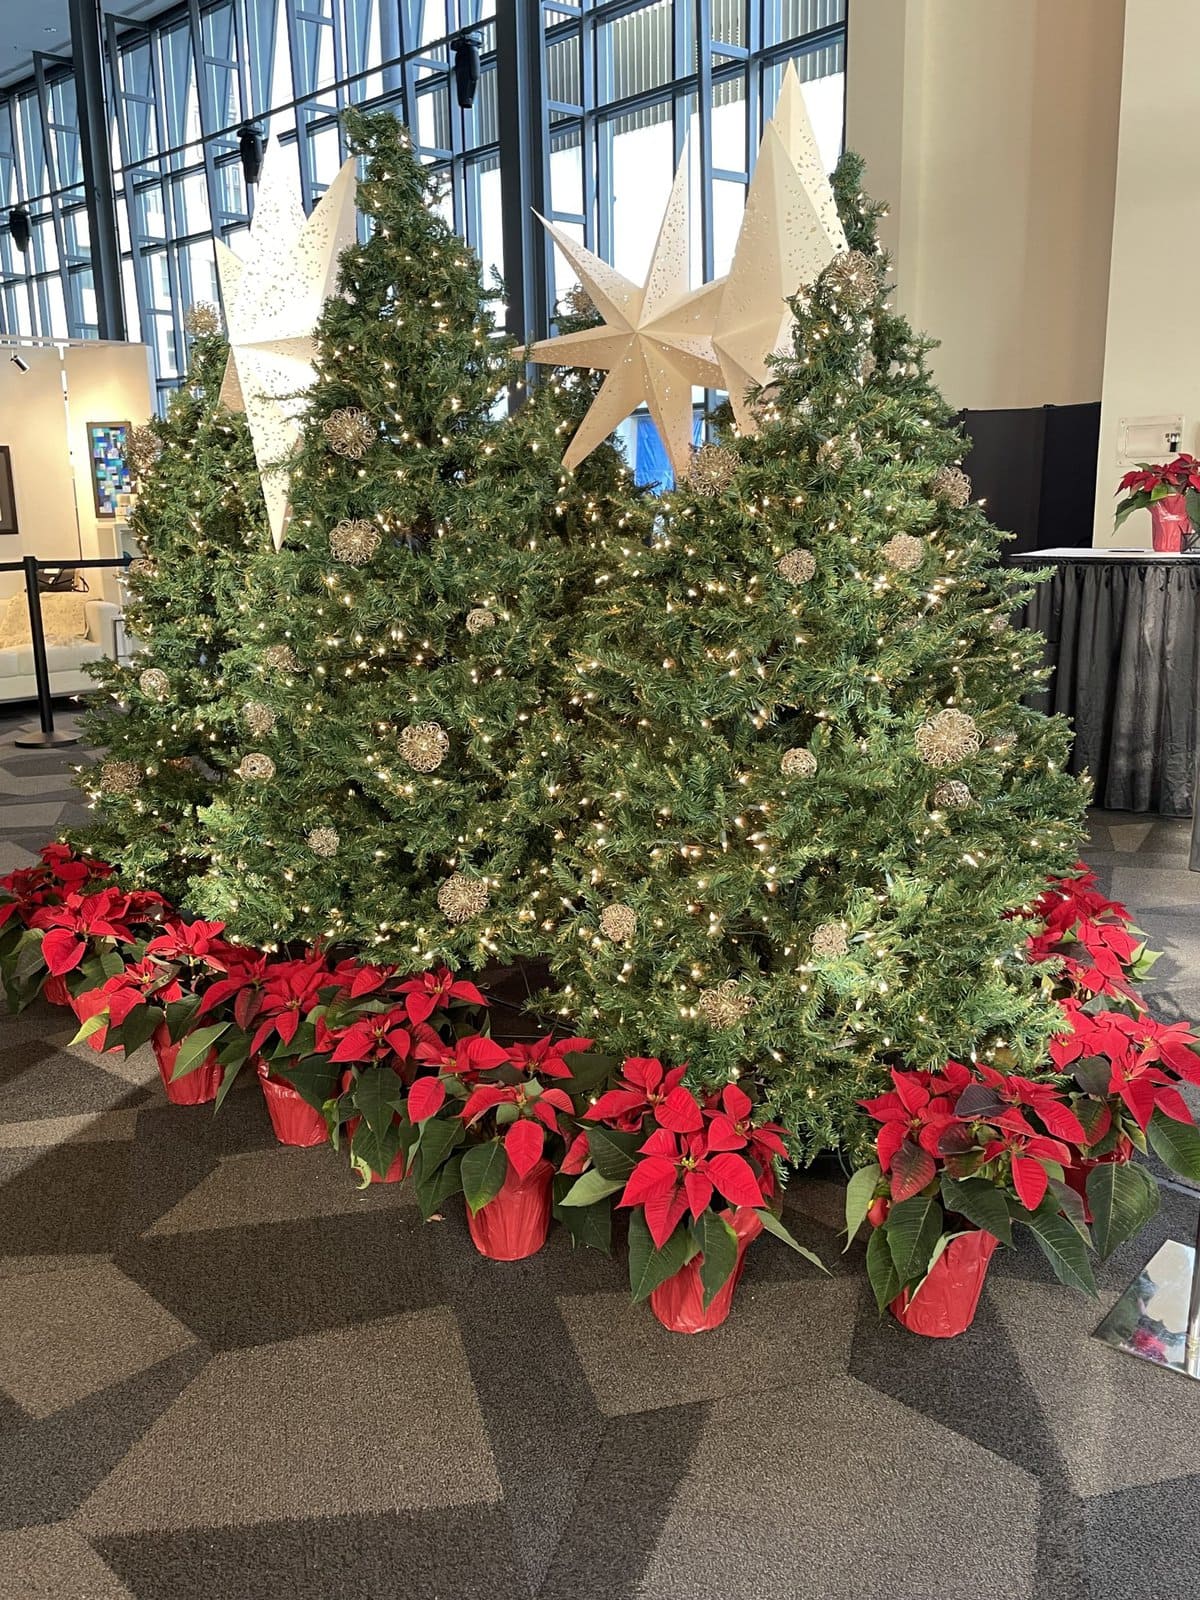 image description: a display of Christmas trees